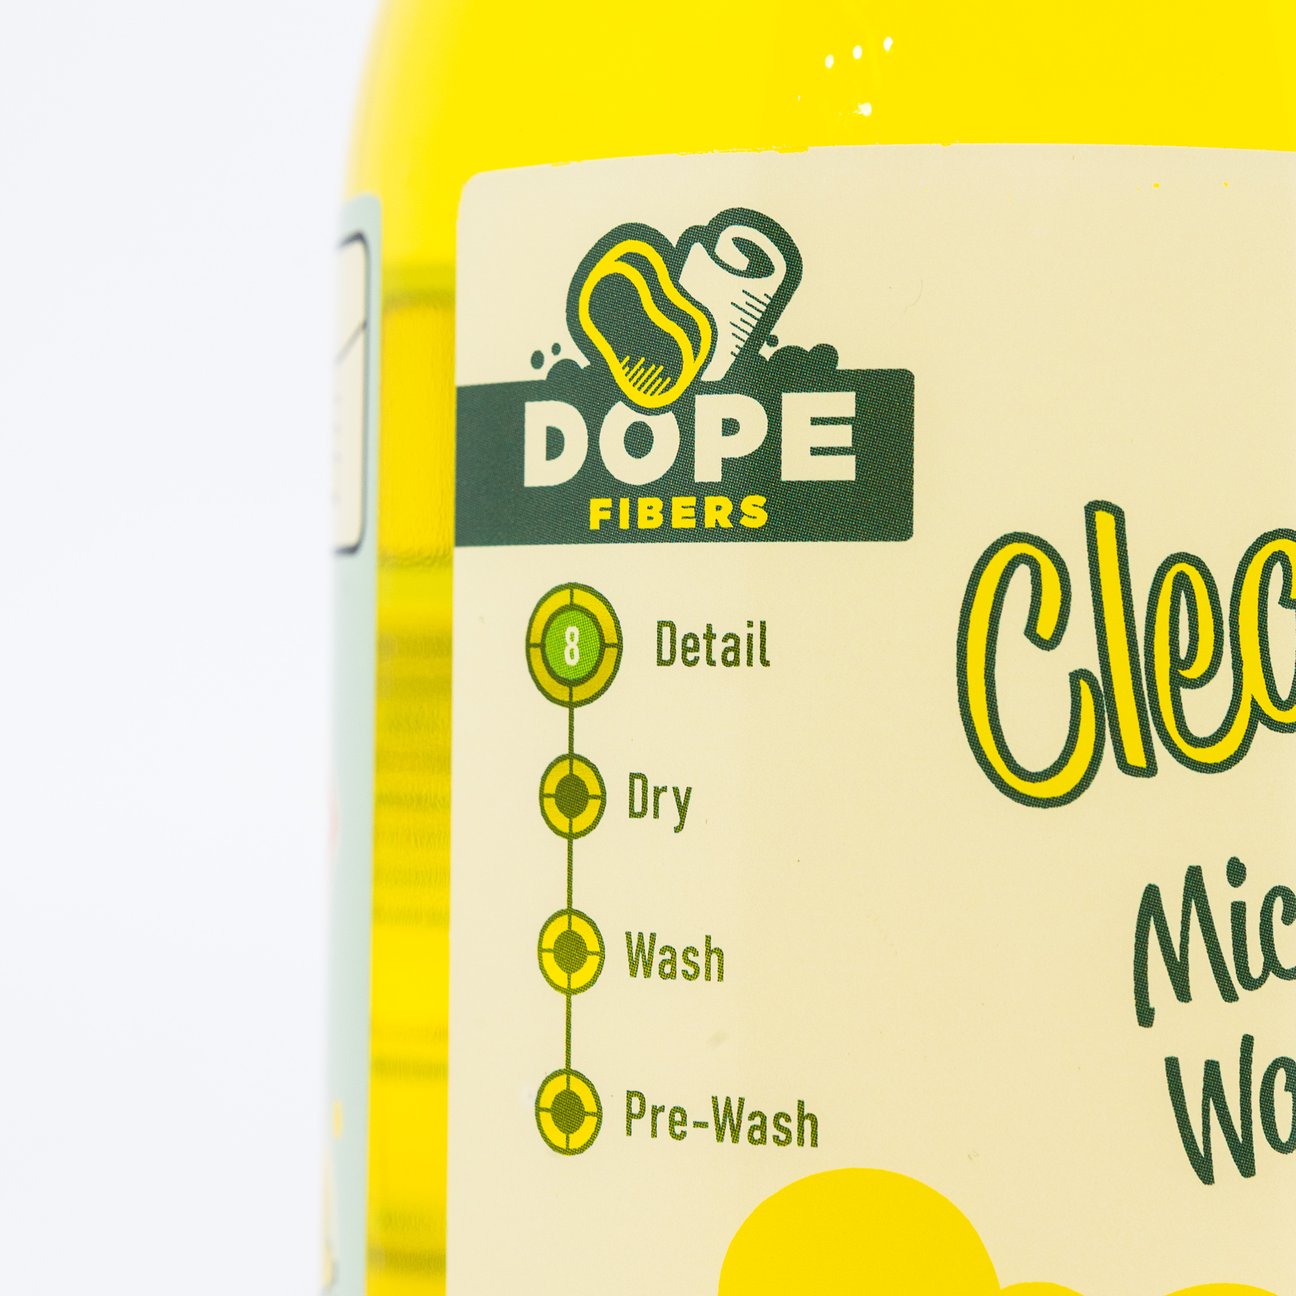 DopeFibers Cleany Microfiber Wash - Detergente lavaggio microfibre